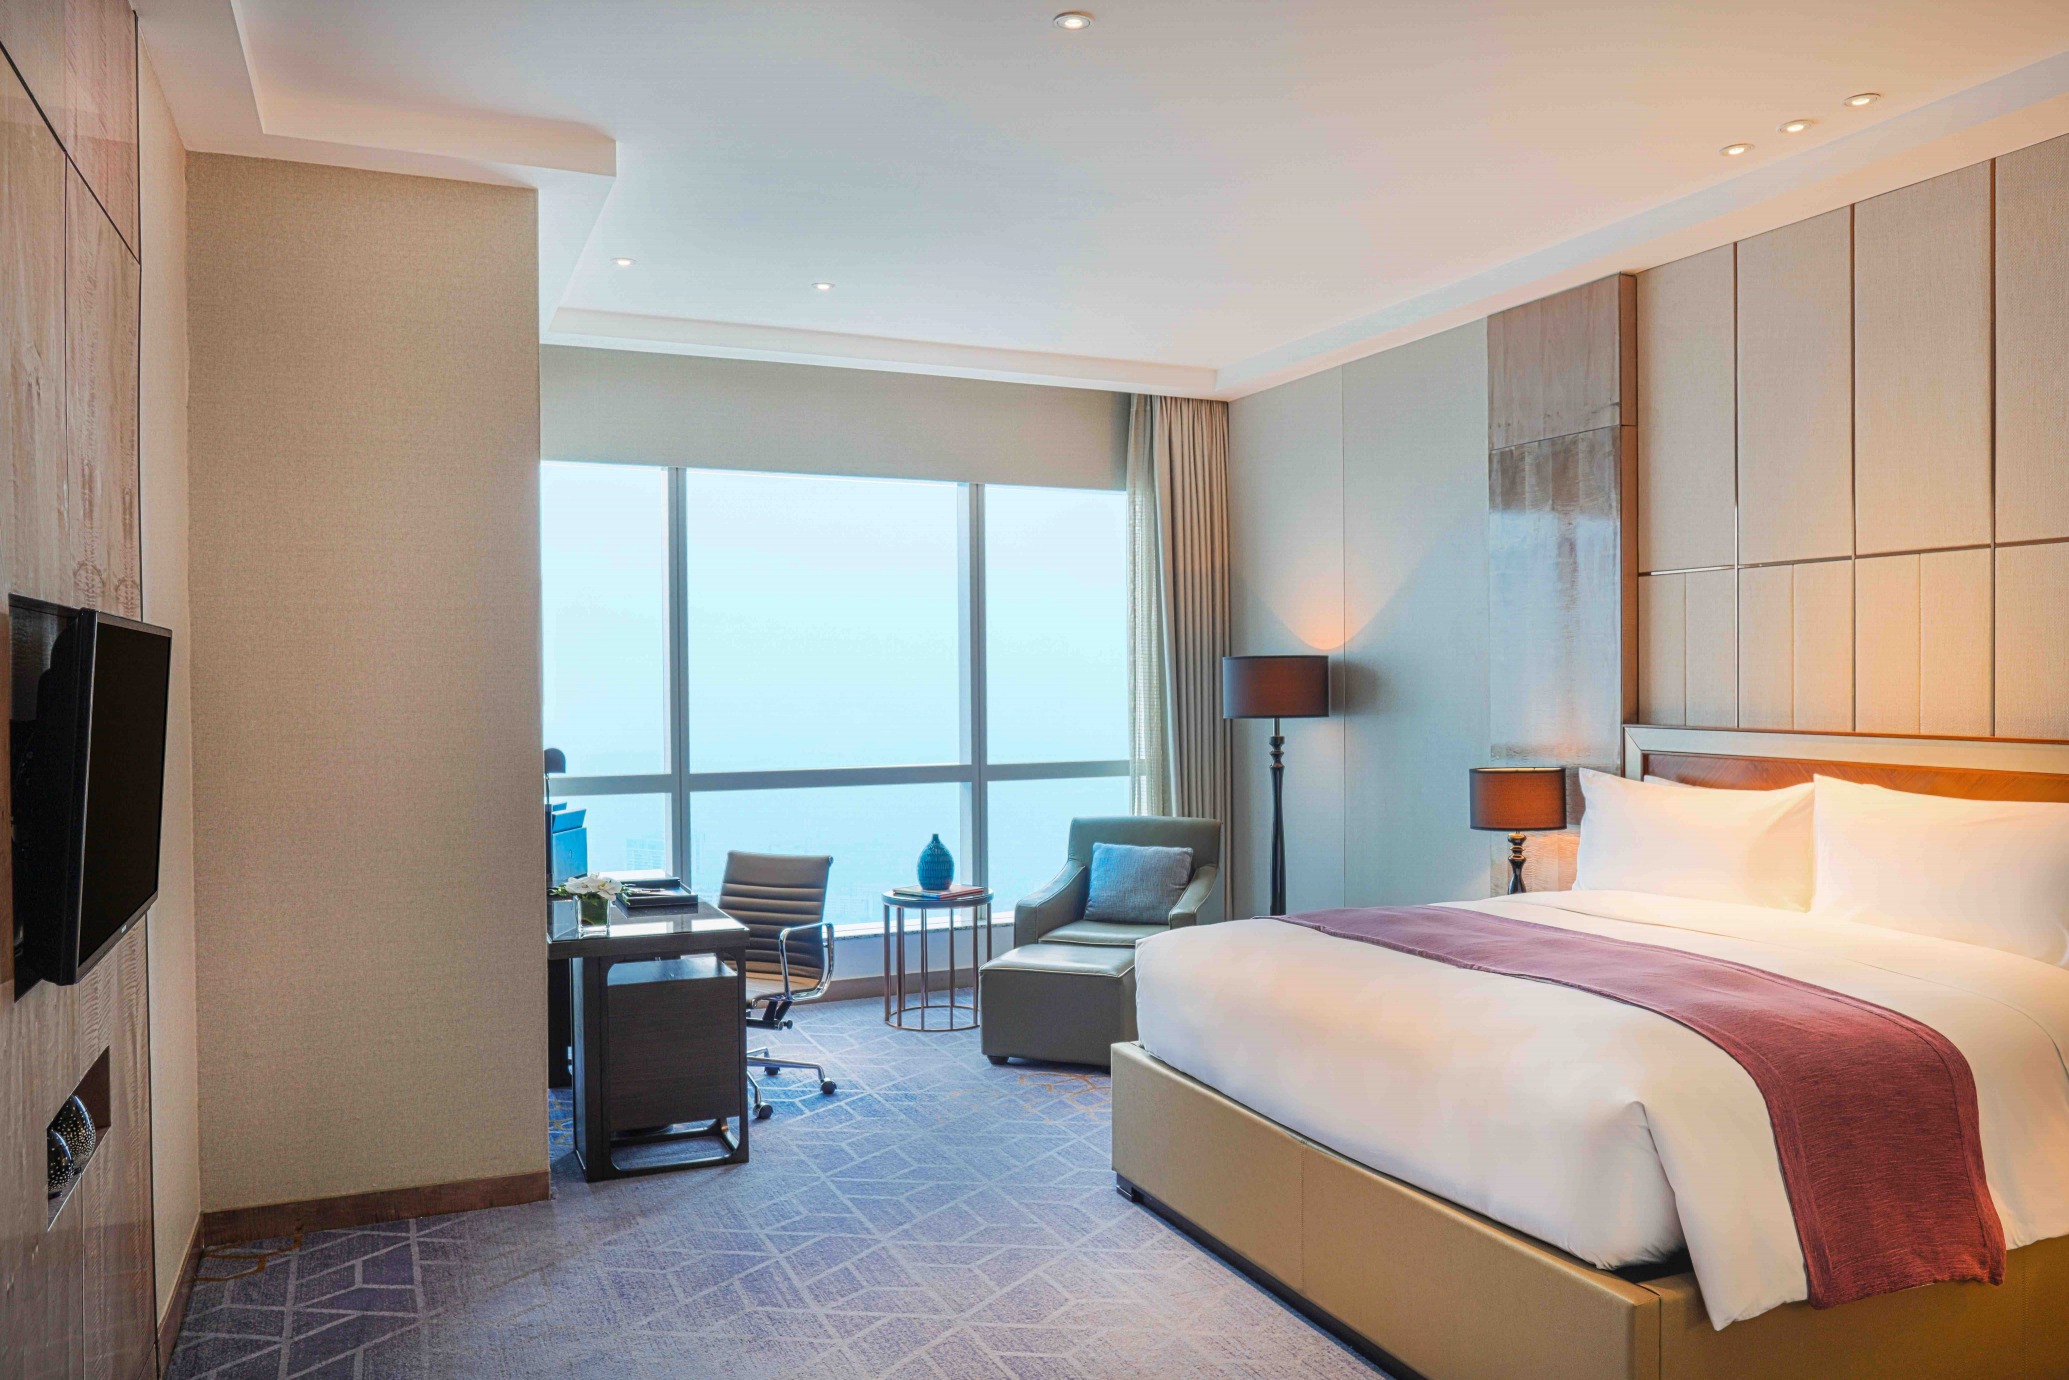 intercontinental hanoi 5 star luxury hotel royal suite bedroom